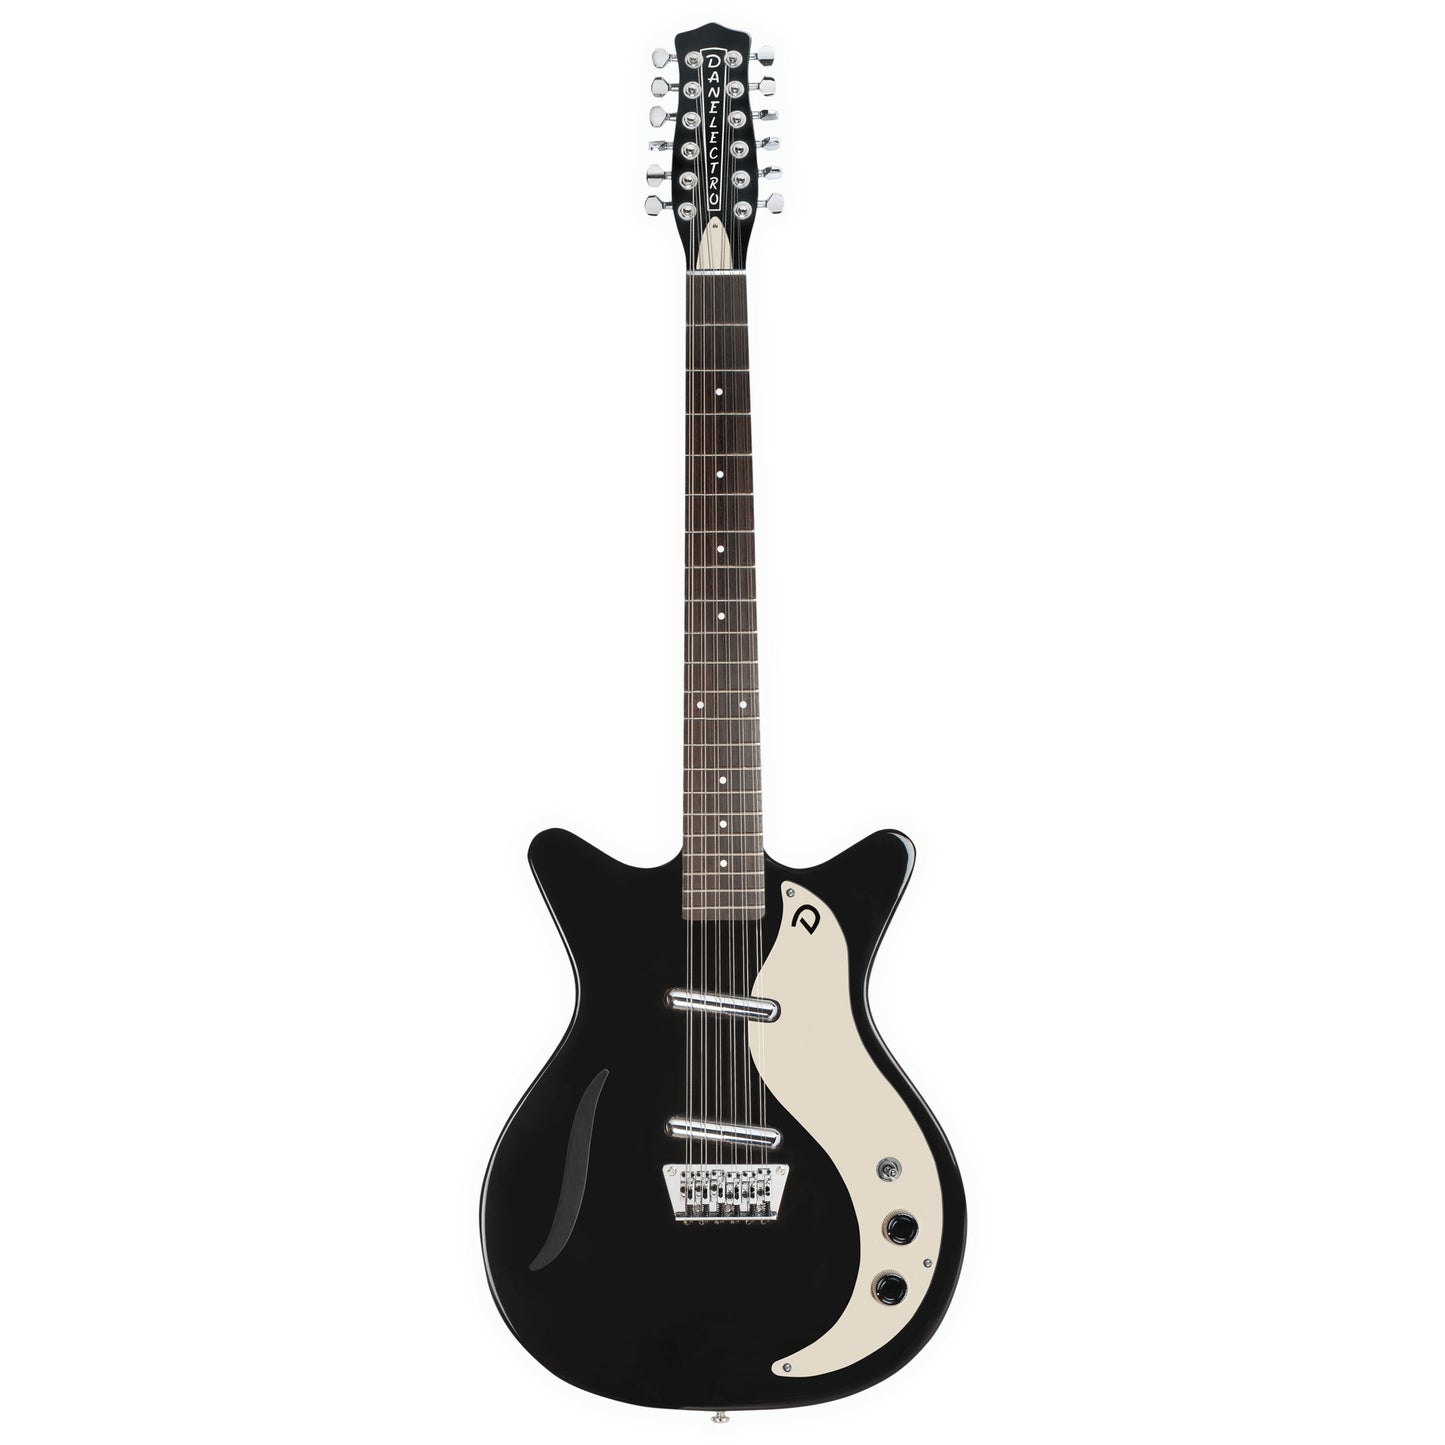 Danelectro ‘59 Vintage 12-String Semi Hollow Electric Guitar in Black